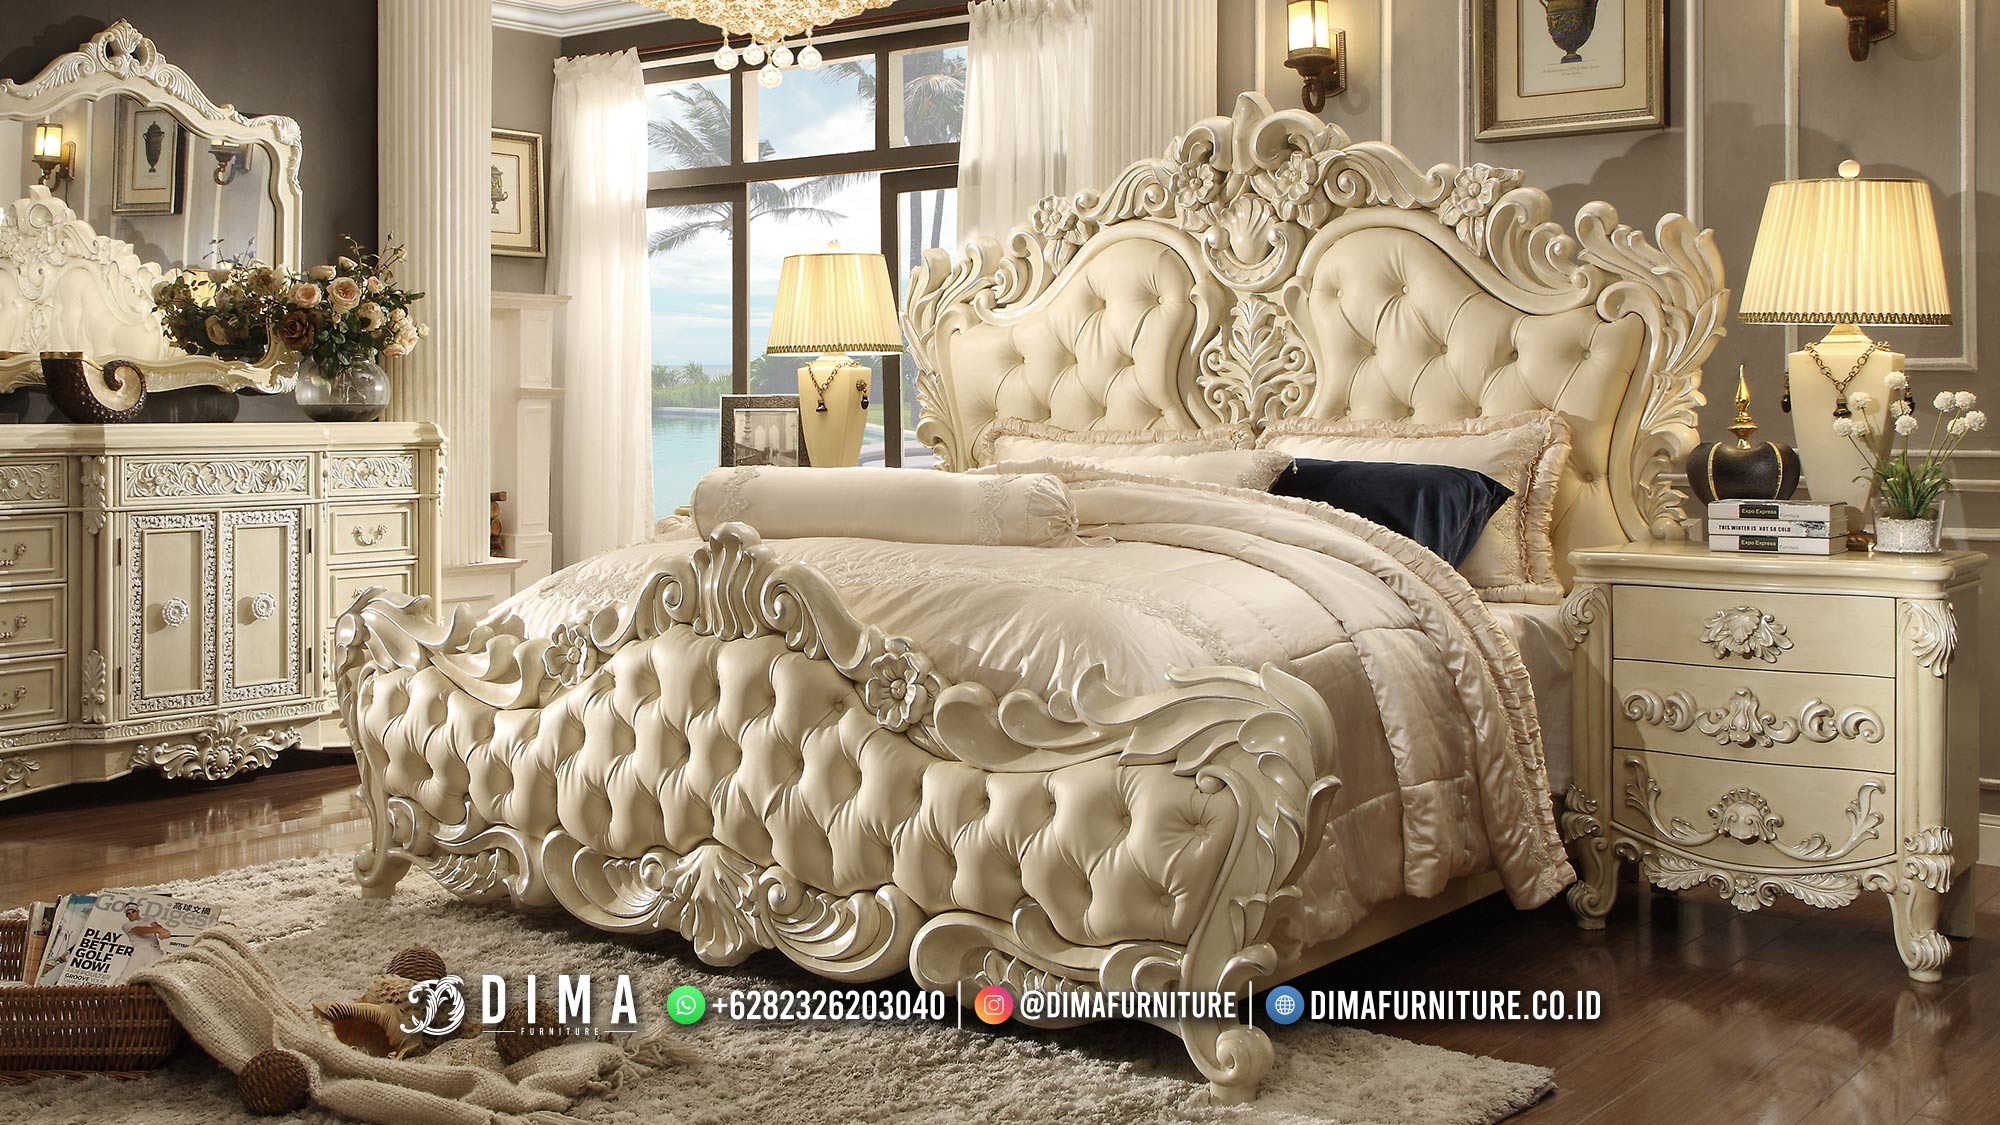 Bestseller Tempat Tidur Mewah Classy, Kamar Set Jepara Luxury Carving DF-2366